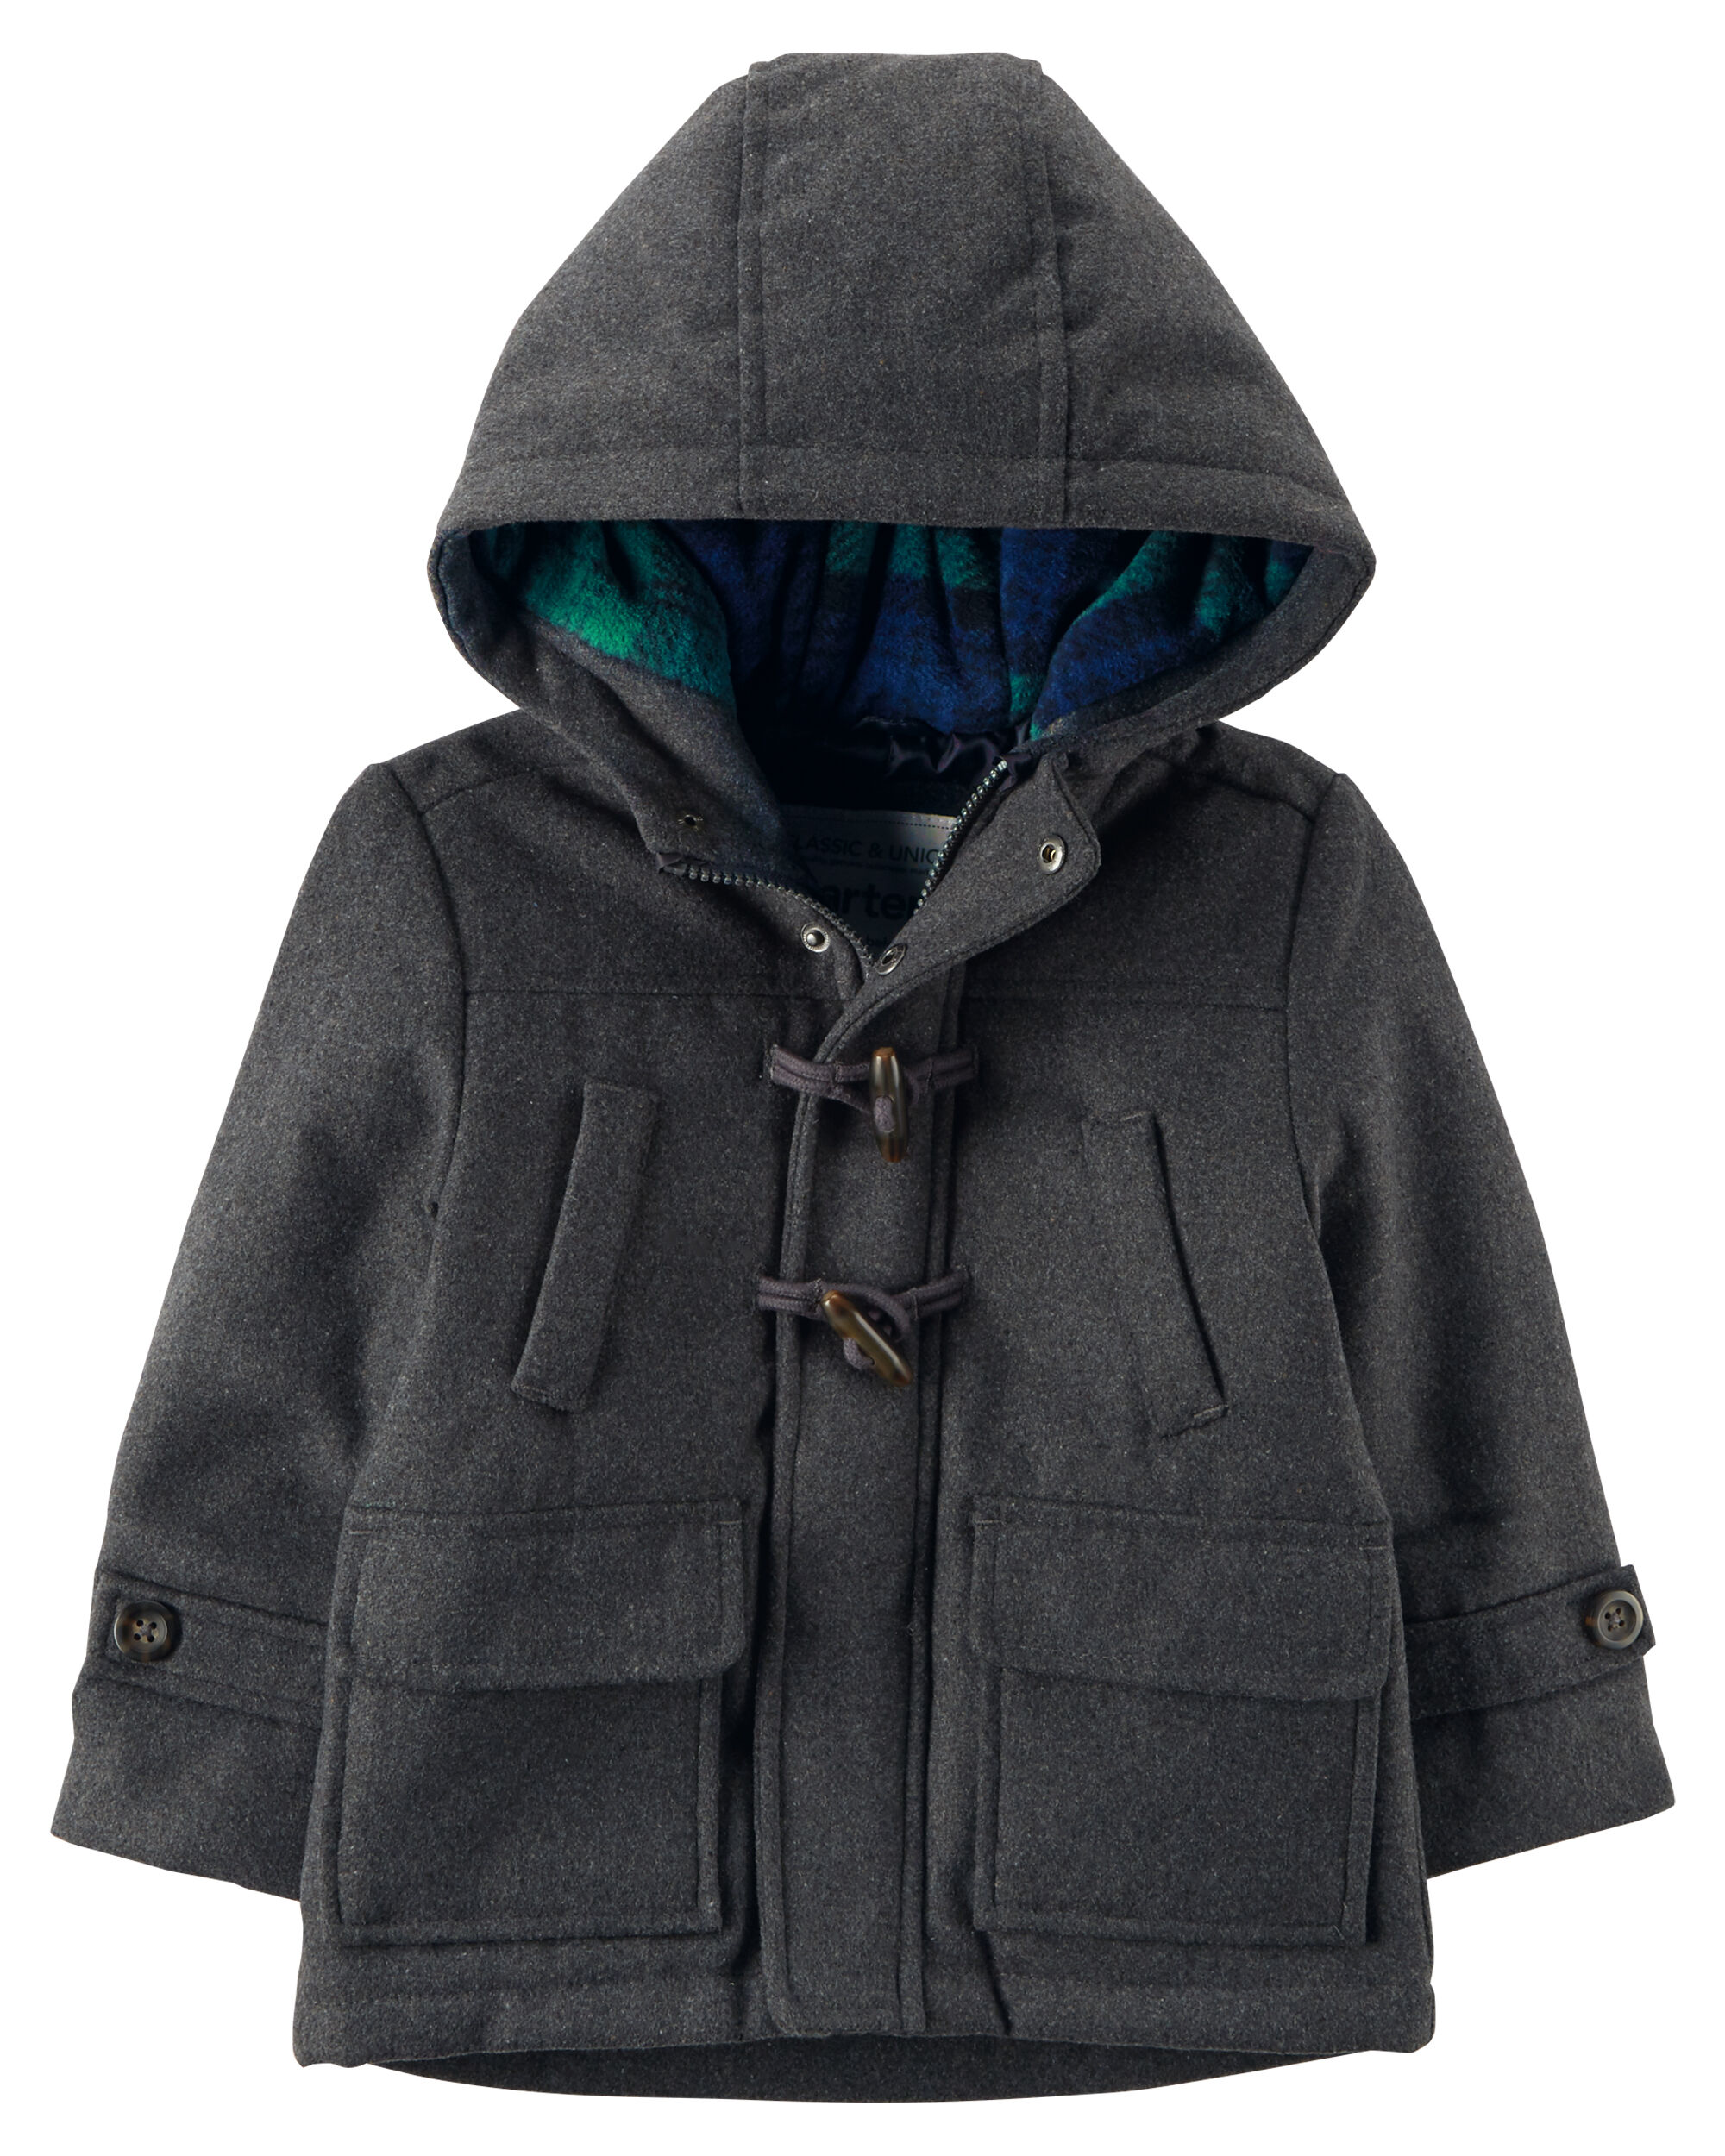 Fleece-Lined Jacket | Carters.com